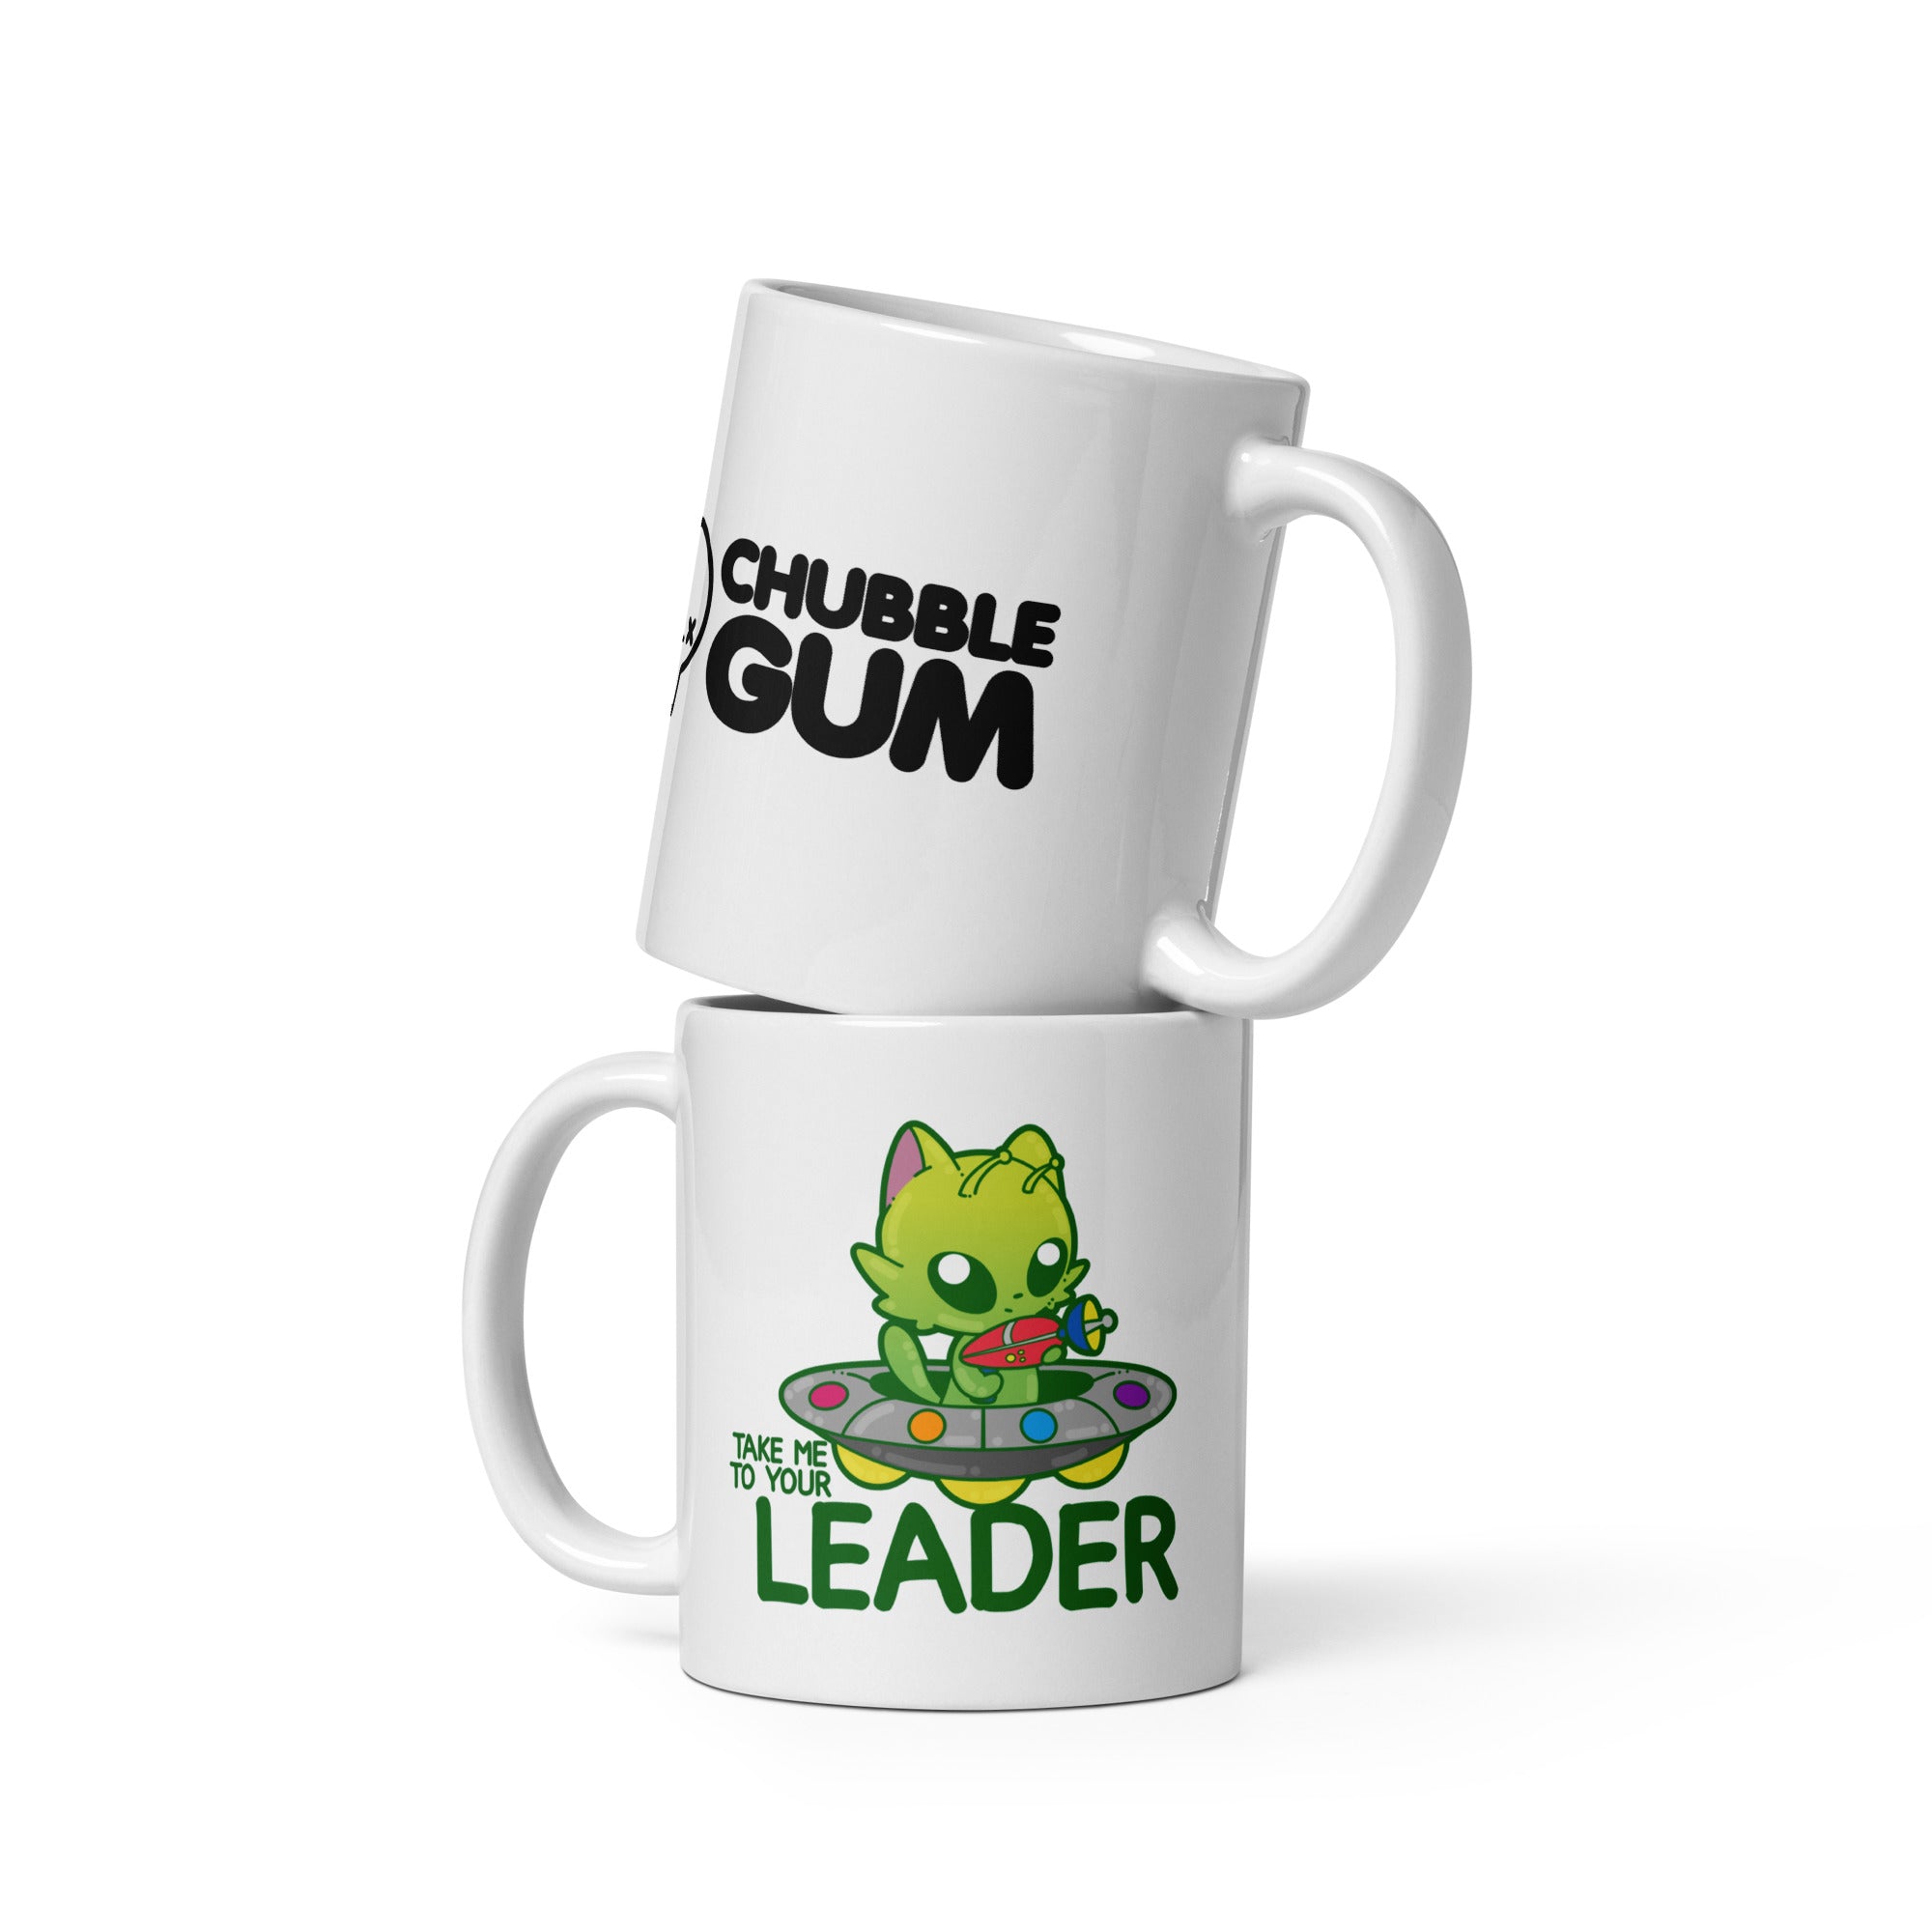 TAKE ME TO YOUR LEADER - Coffee Mug - ChubbleGumLLC